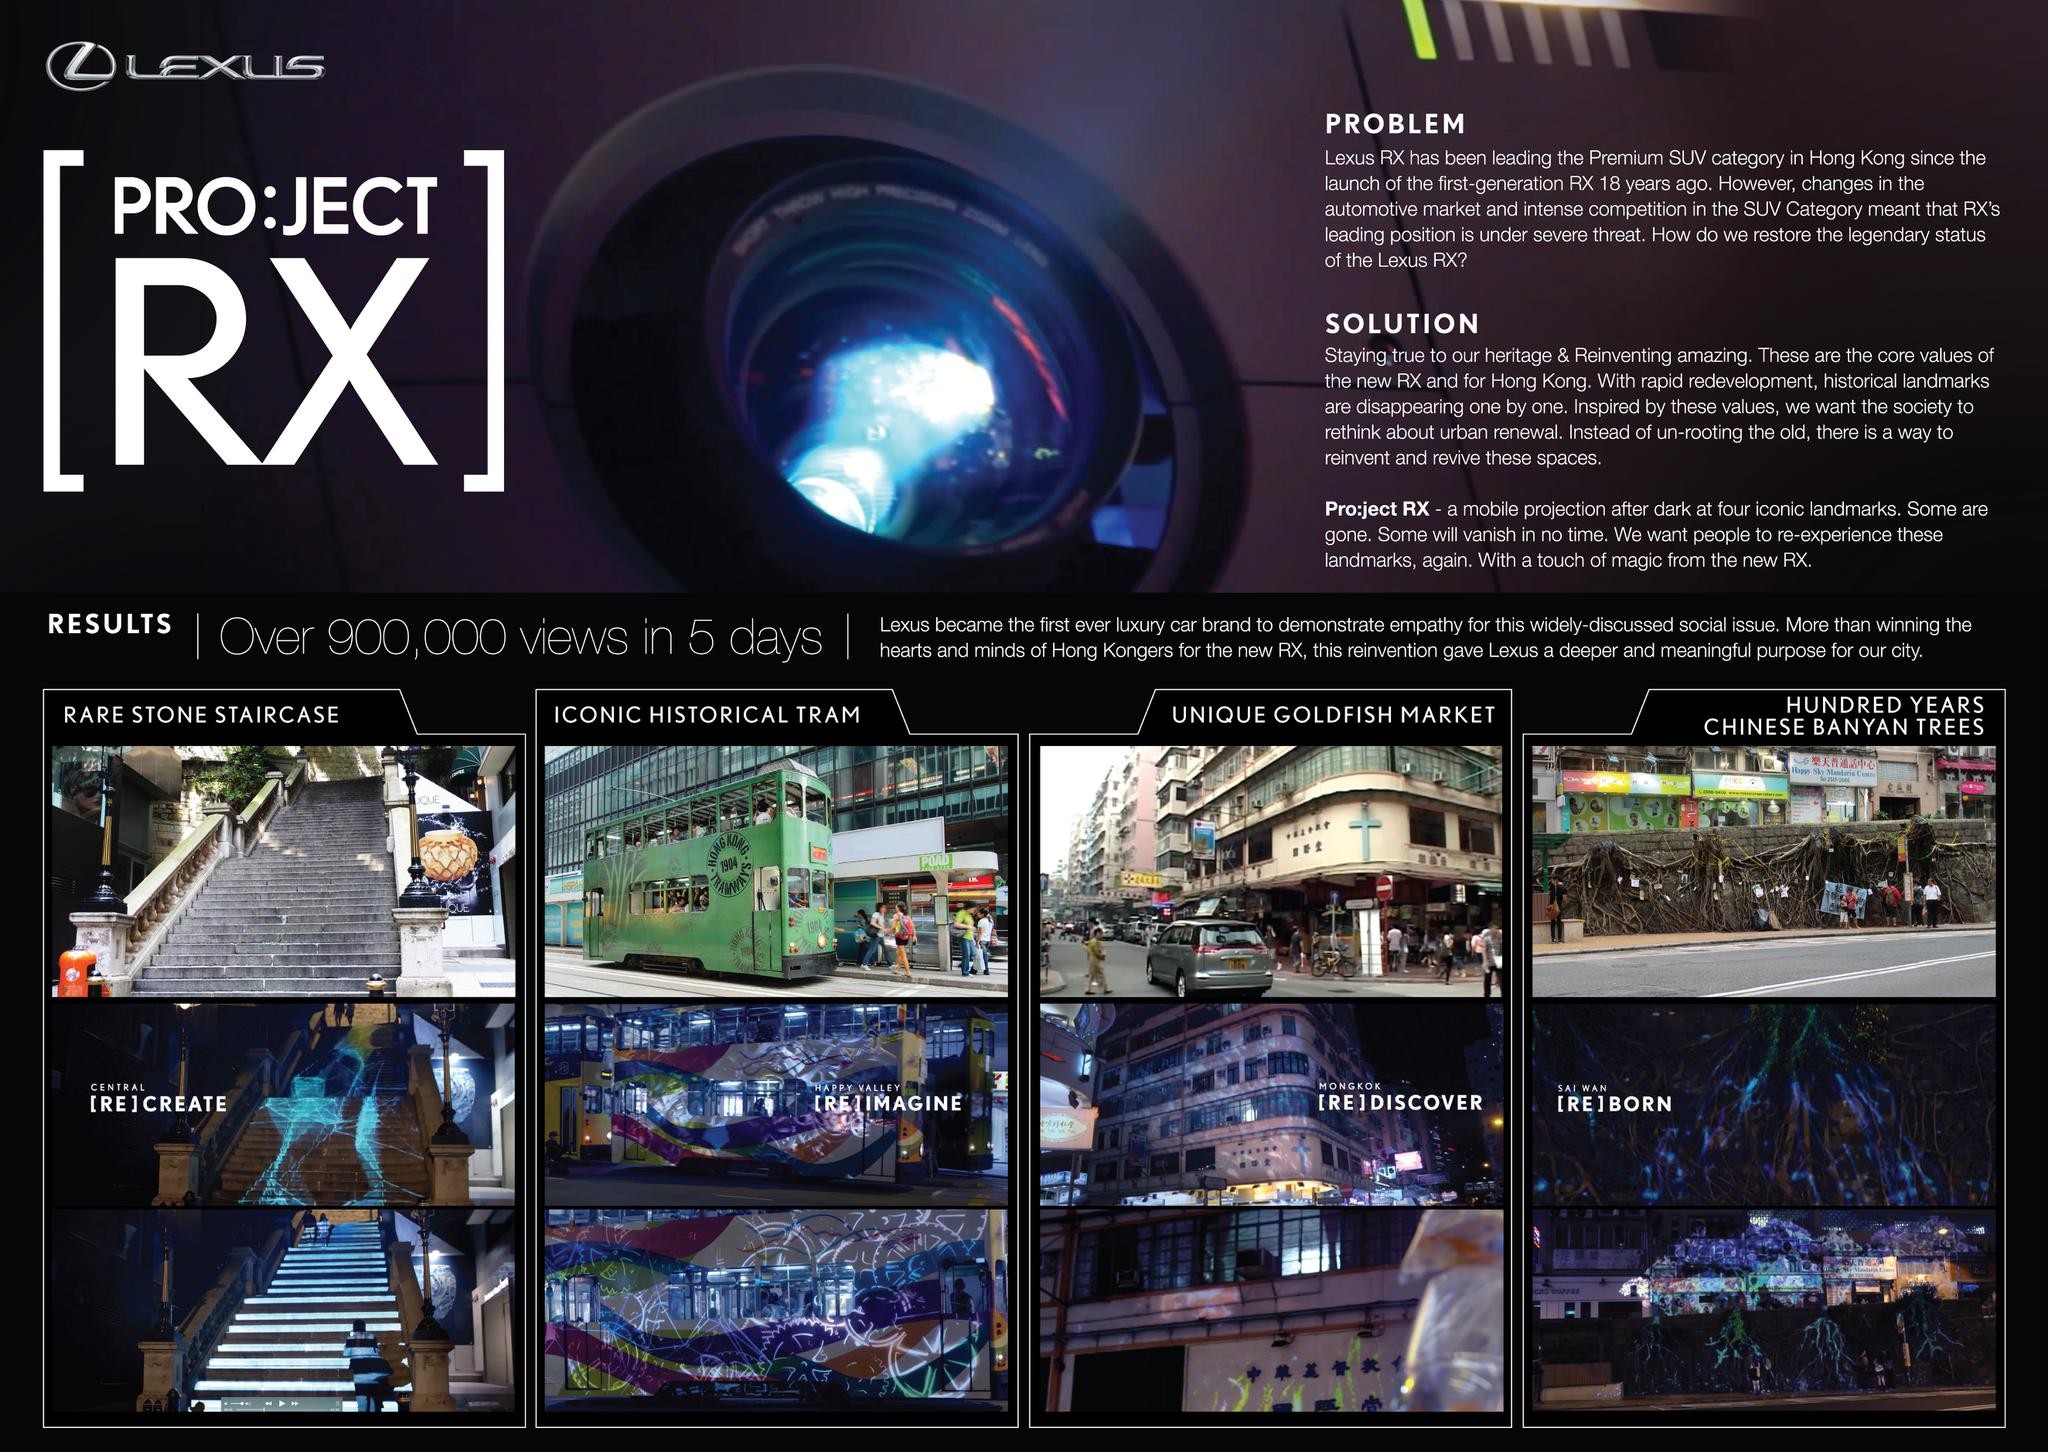 Lexus Project RX - “Reinventing Amazing"